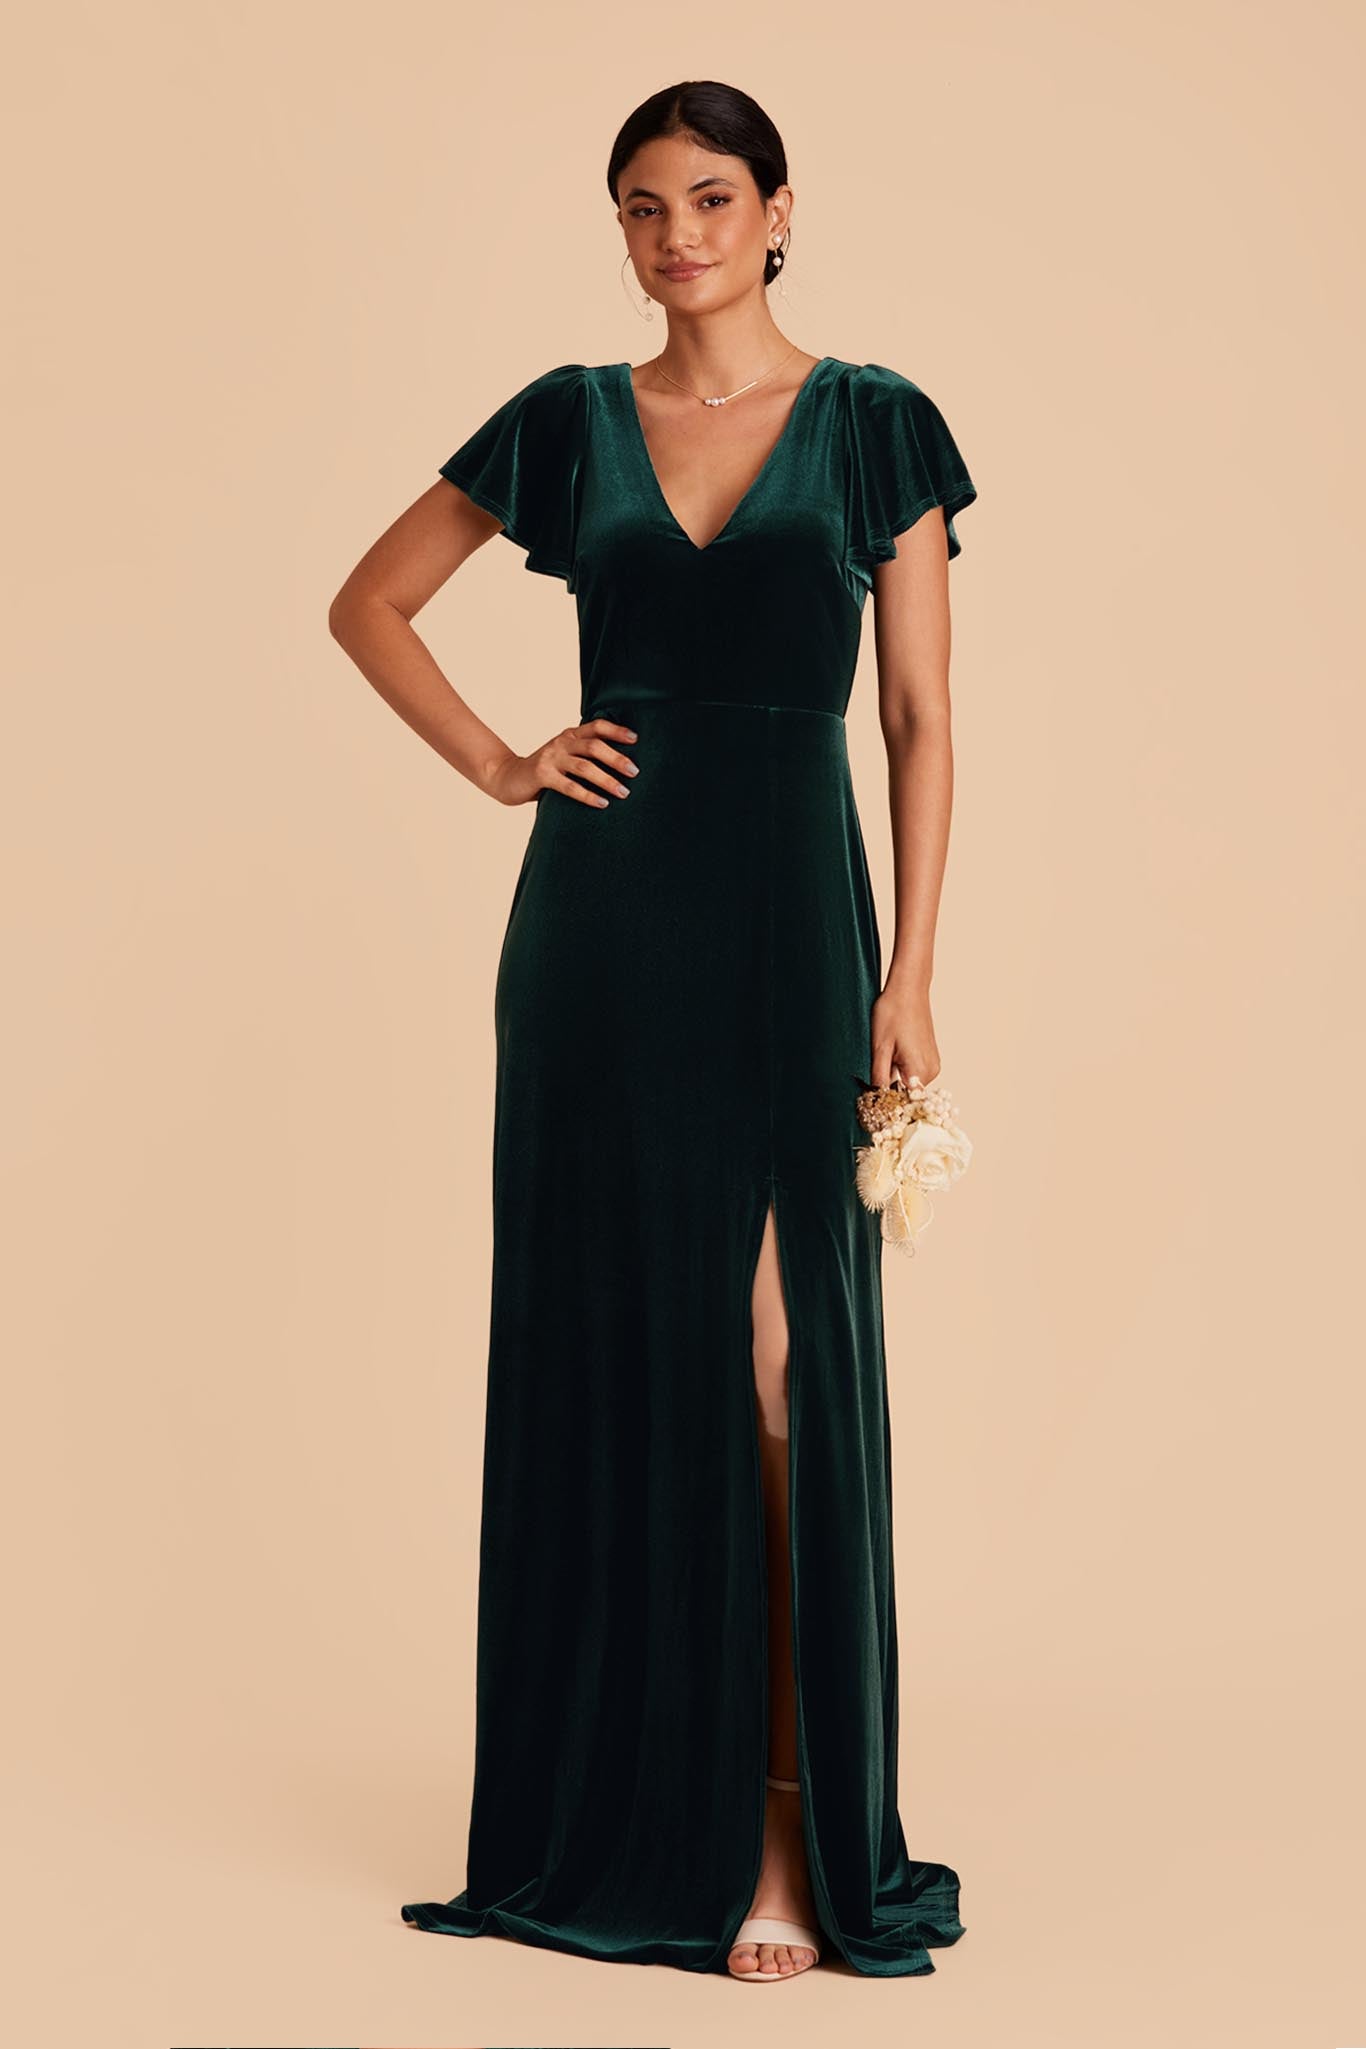 Emerald Hannah Velvet Dress by Birdy Grey